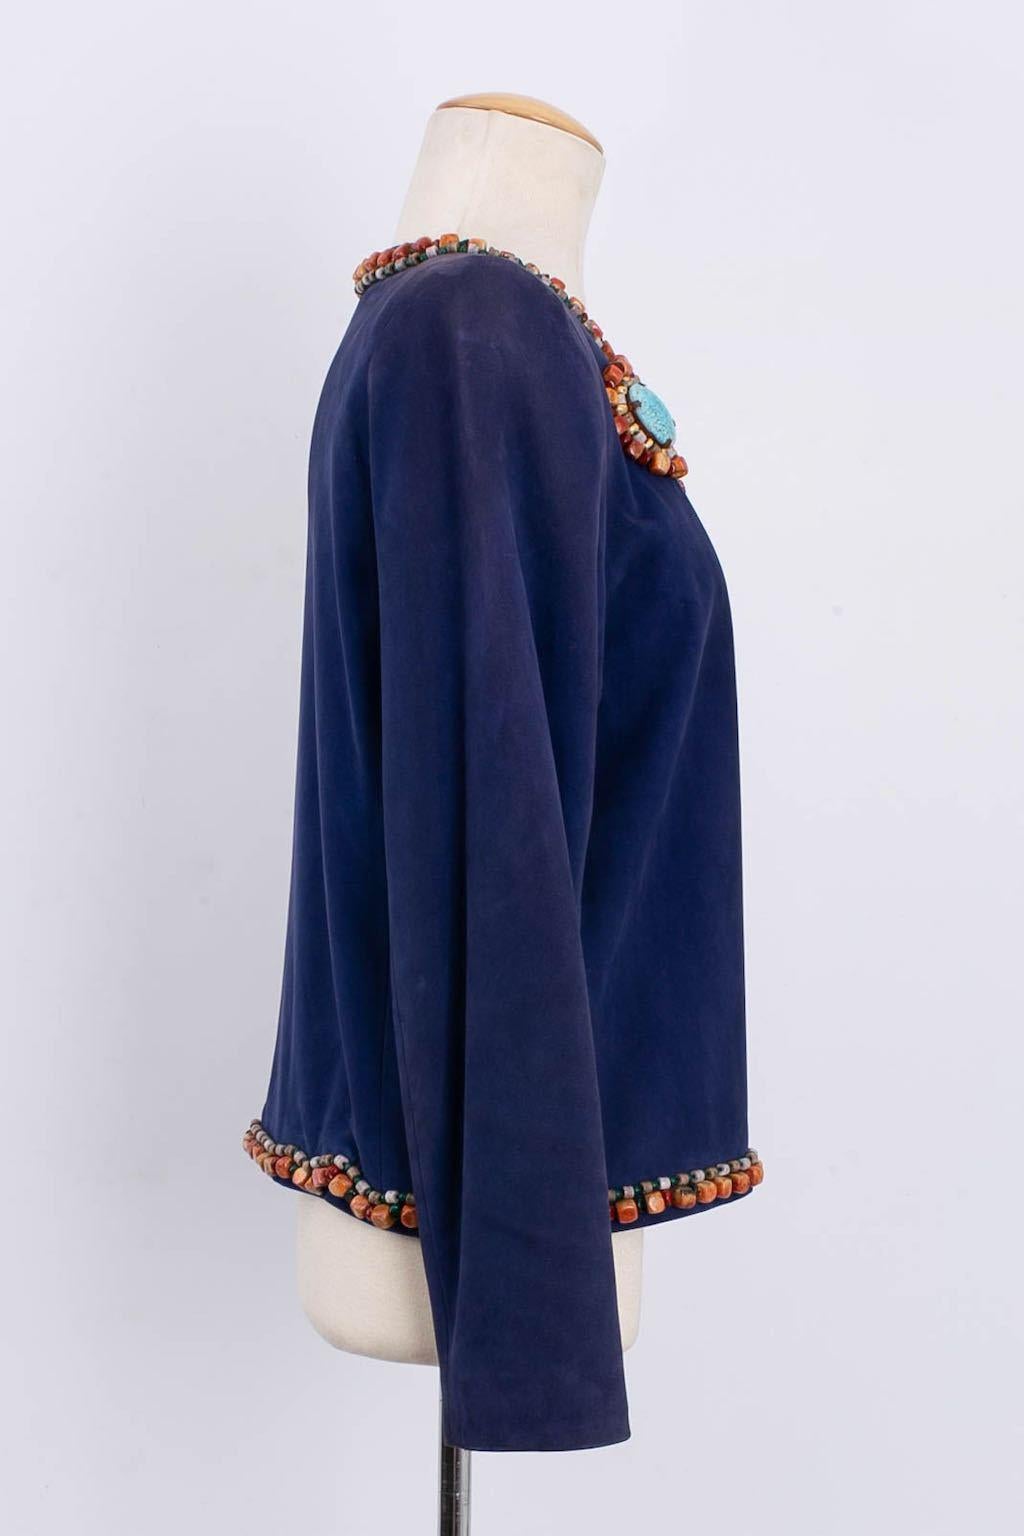 Women's Yves Saint Laurent Lambskin Jacket with Hard Stones For Sale